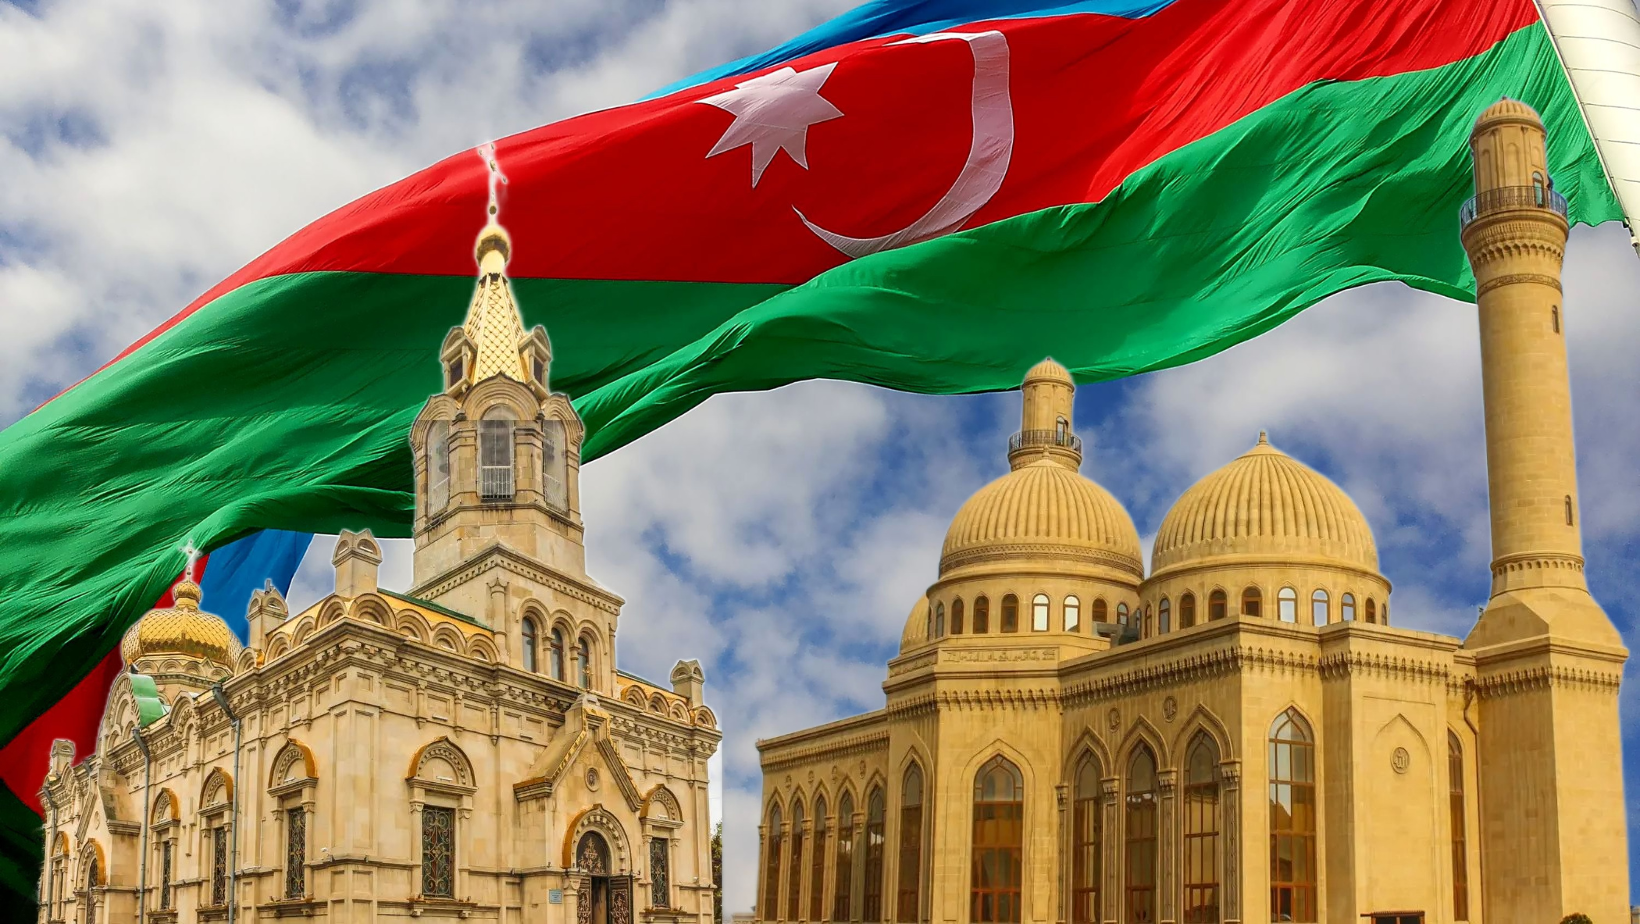 Advancing cultural, religious harmony: Azerbaijan's progressive approach